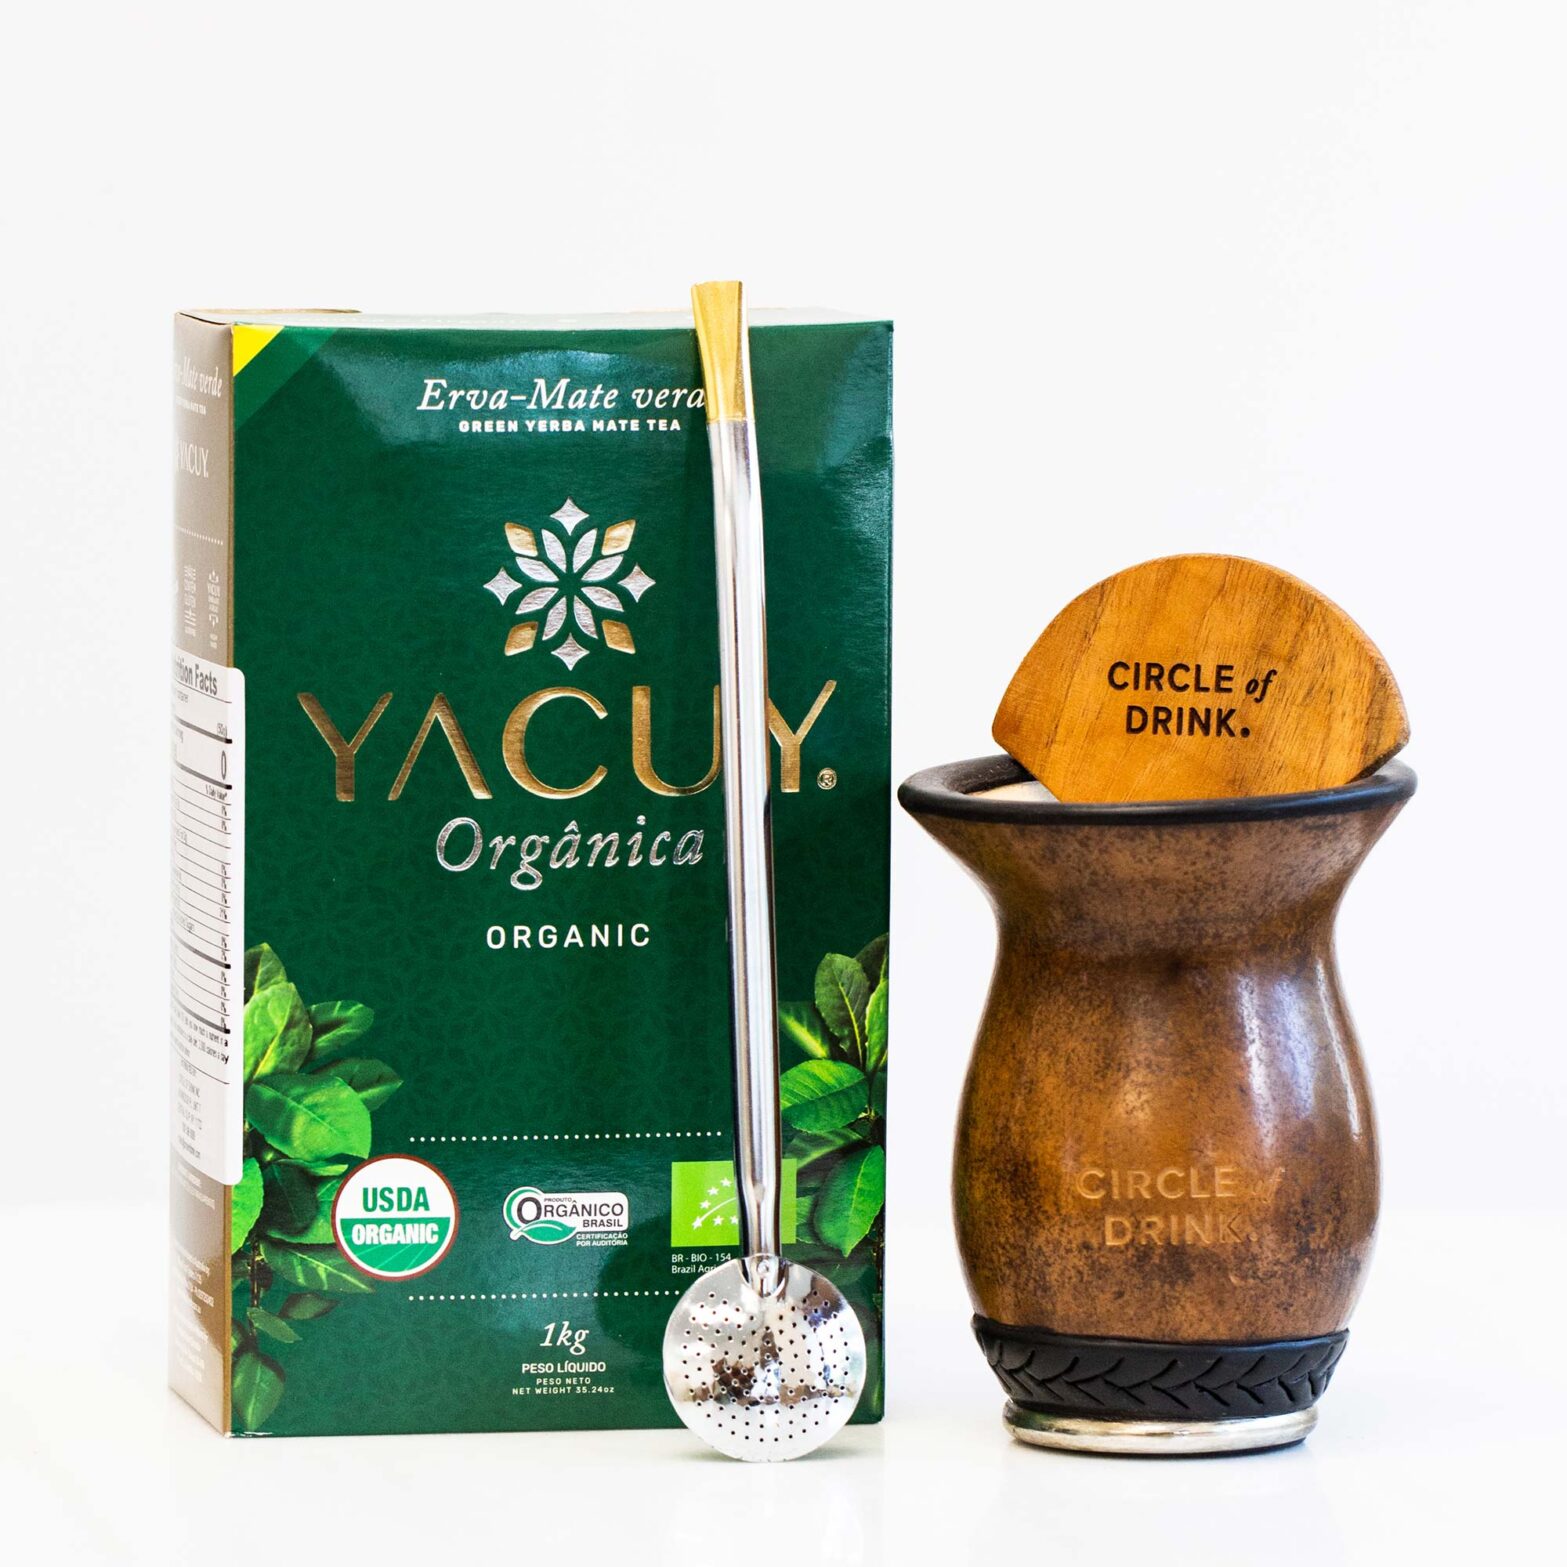 Sabado Chalice Yerba Mate Kit with Yacuy Organic Erva Mate